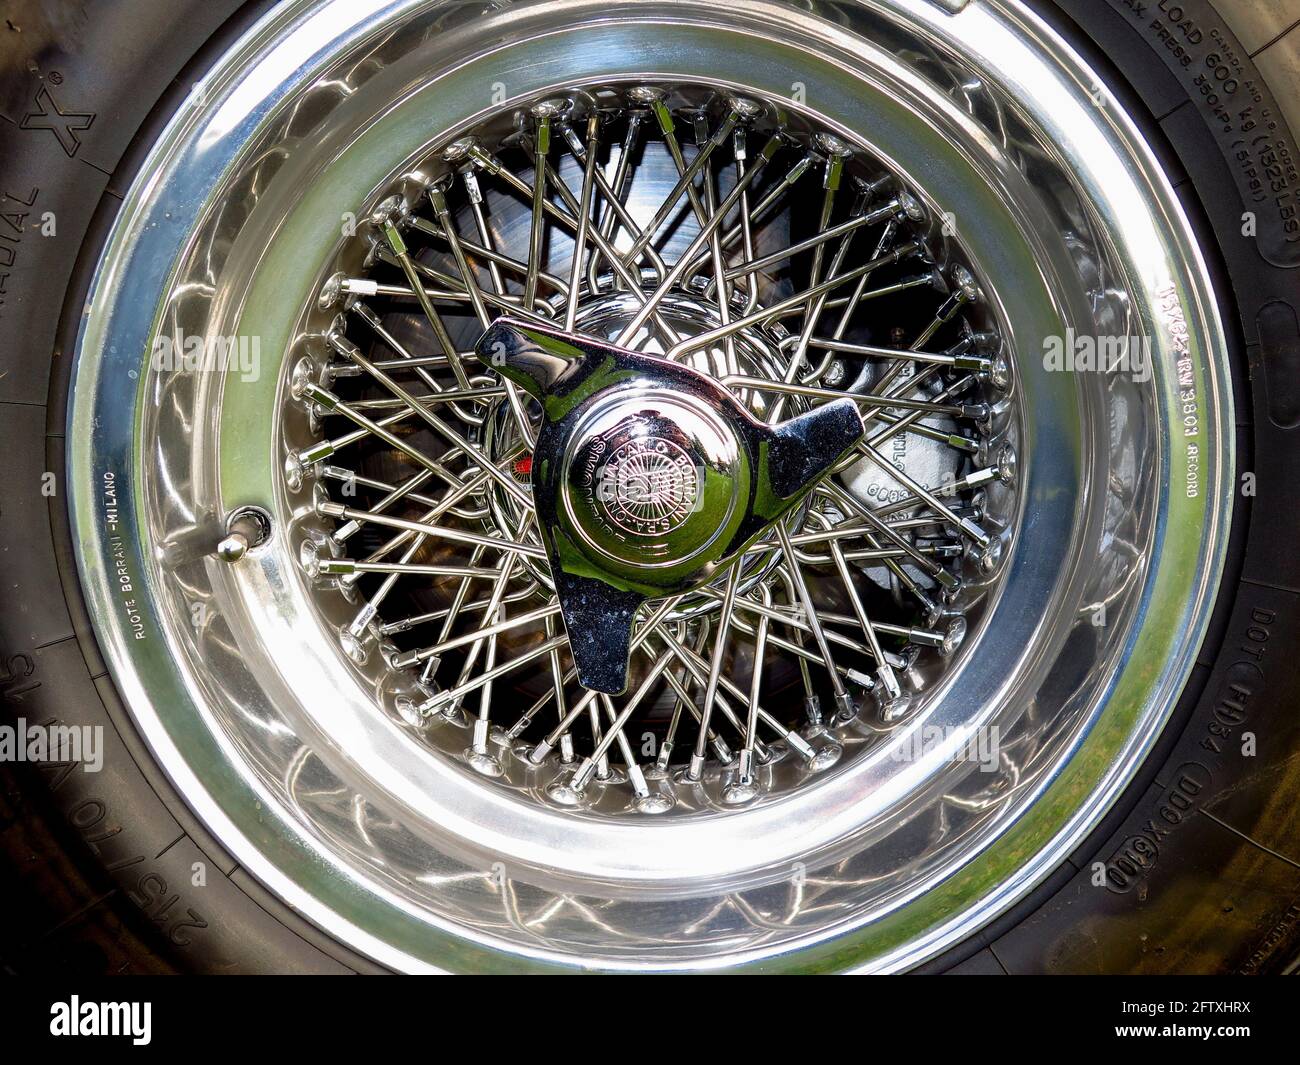 Chrome wire sports car wheel on vintage car Stock Photo